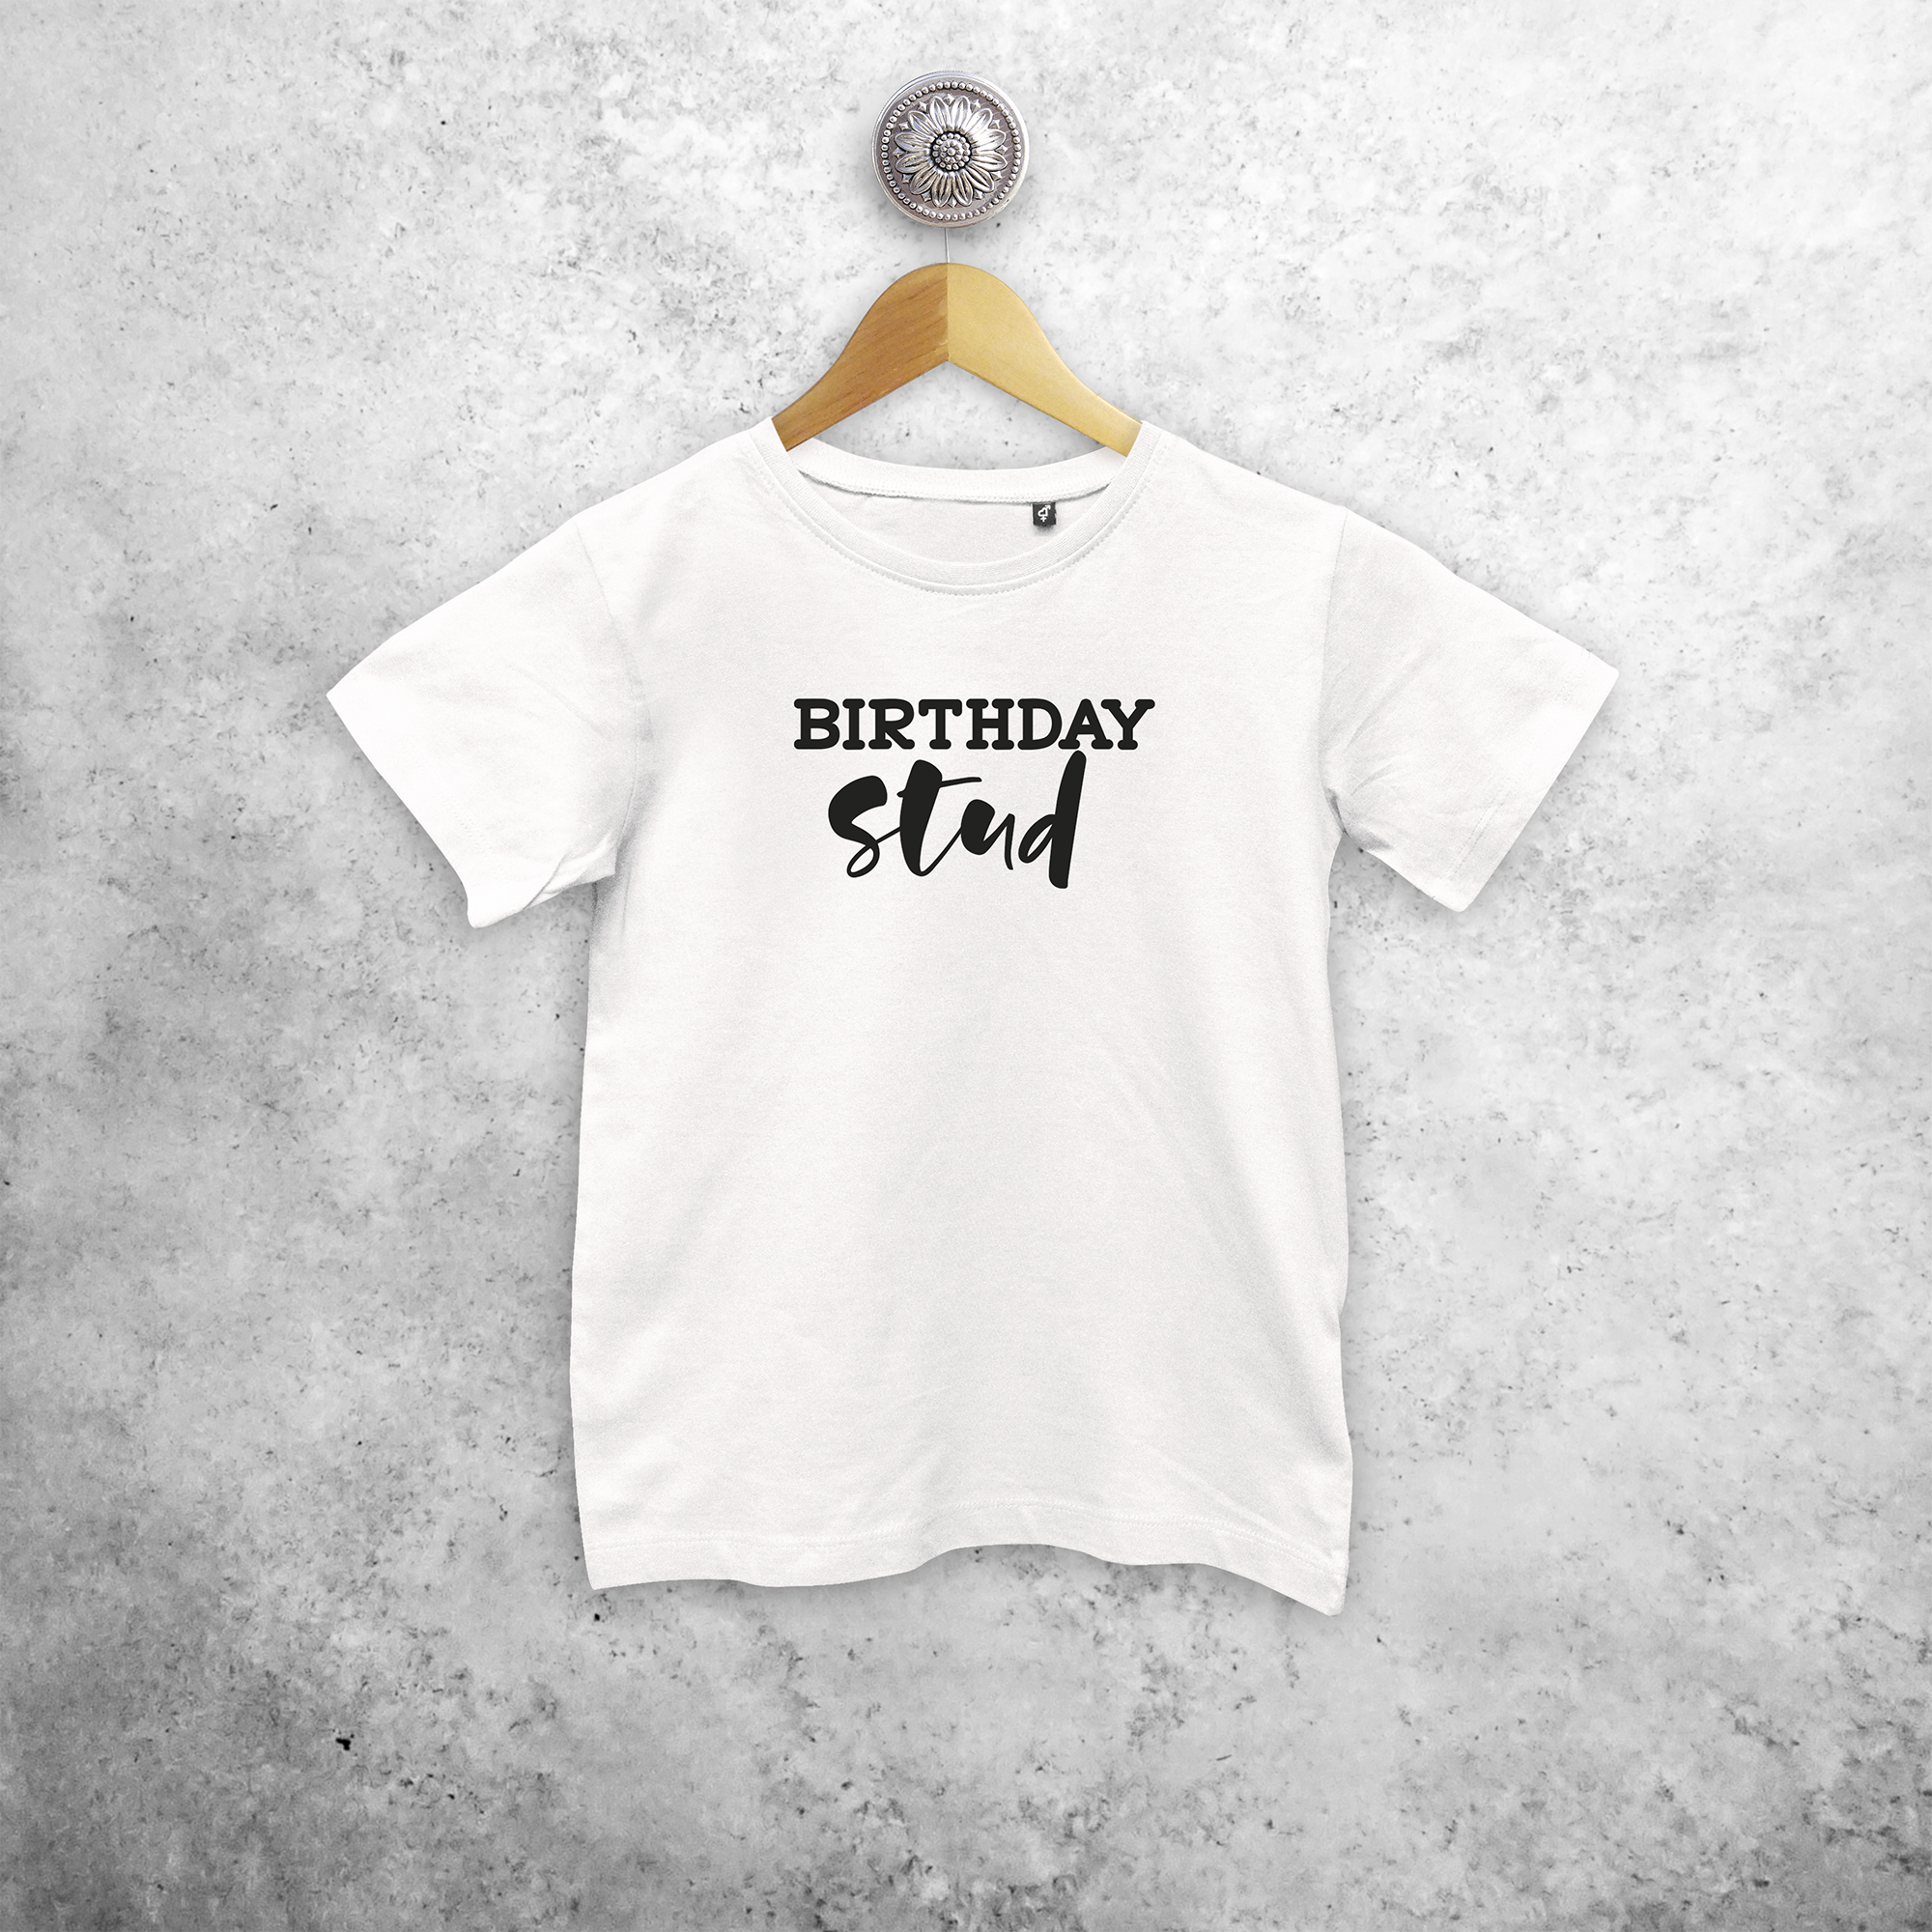 'Birthday stud' kids shortsleeve shirt